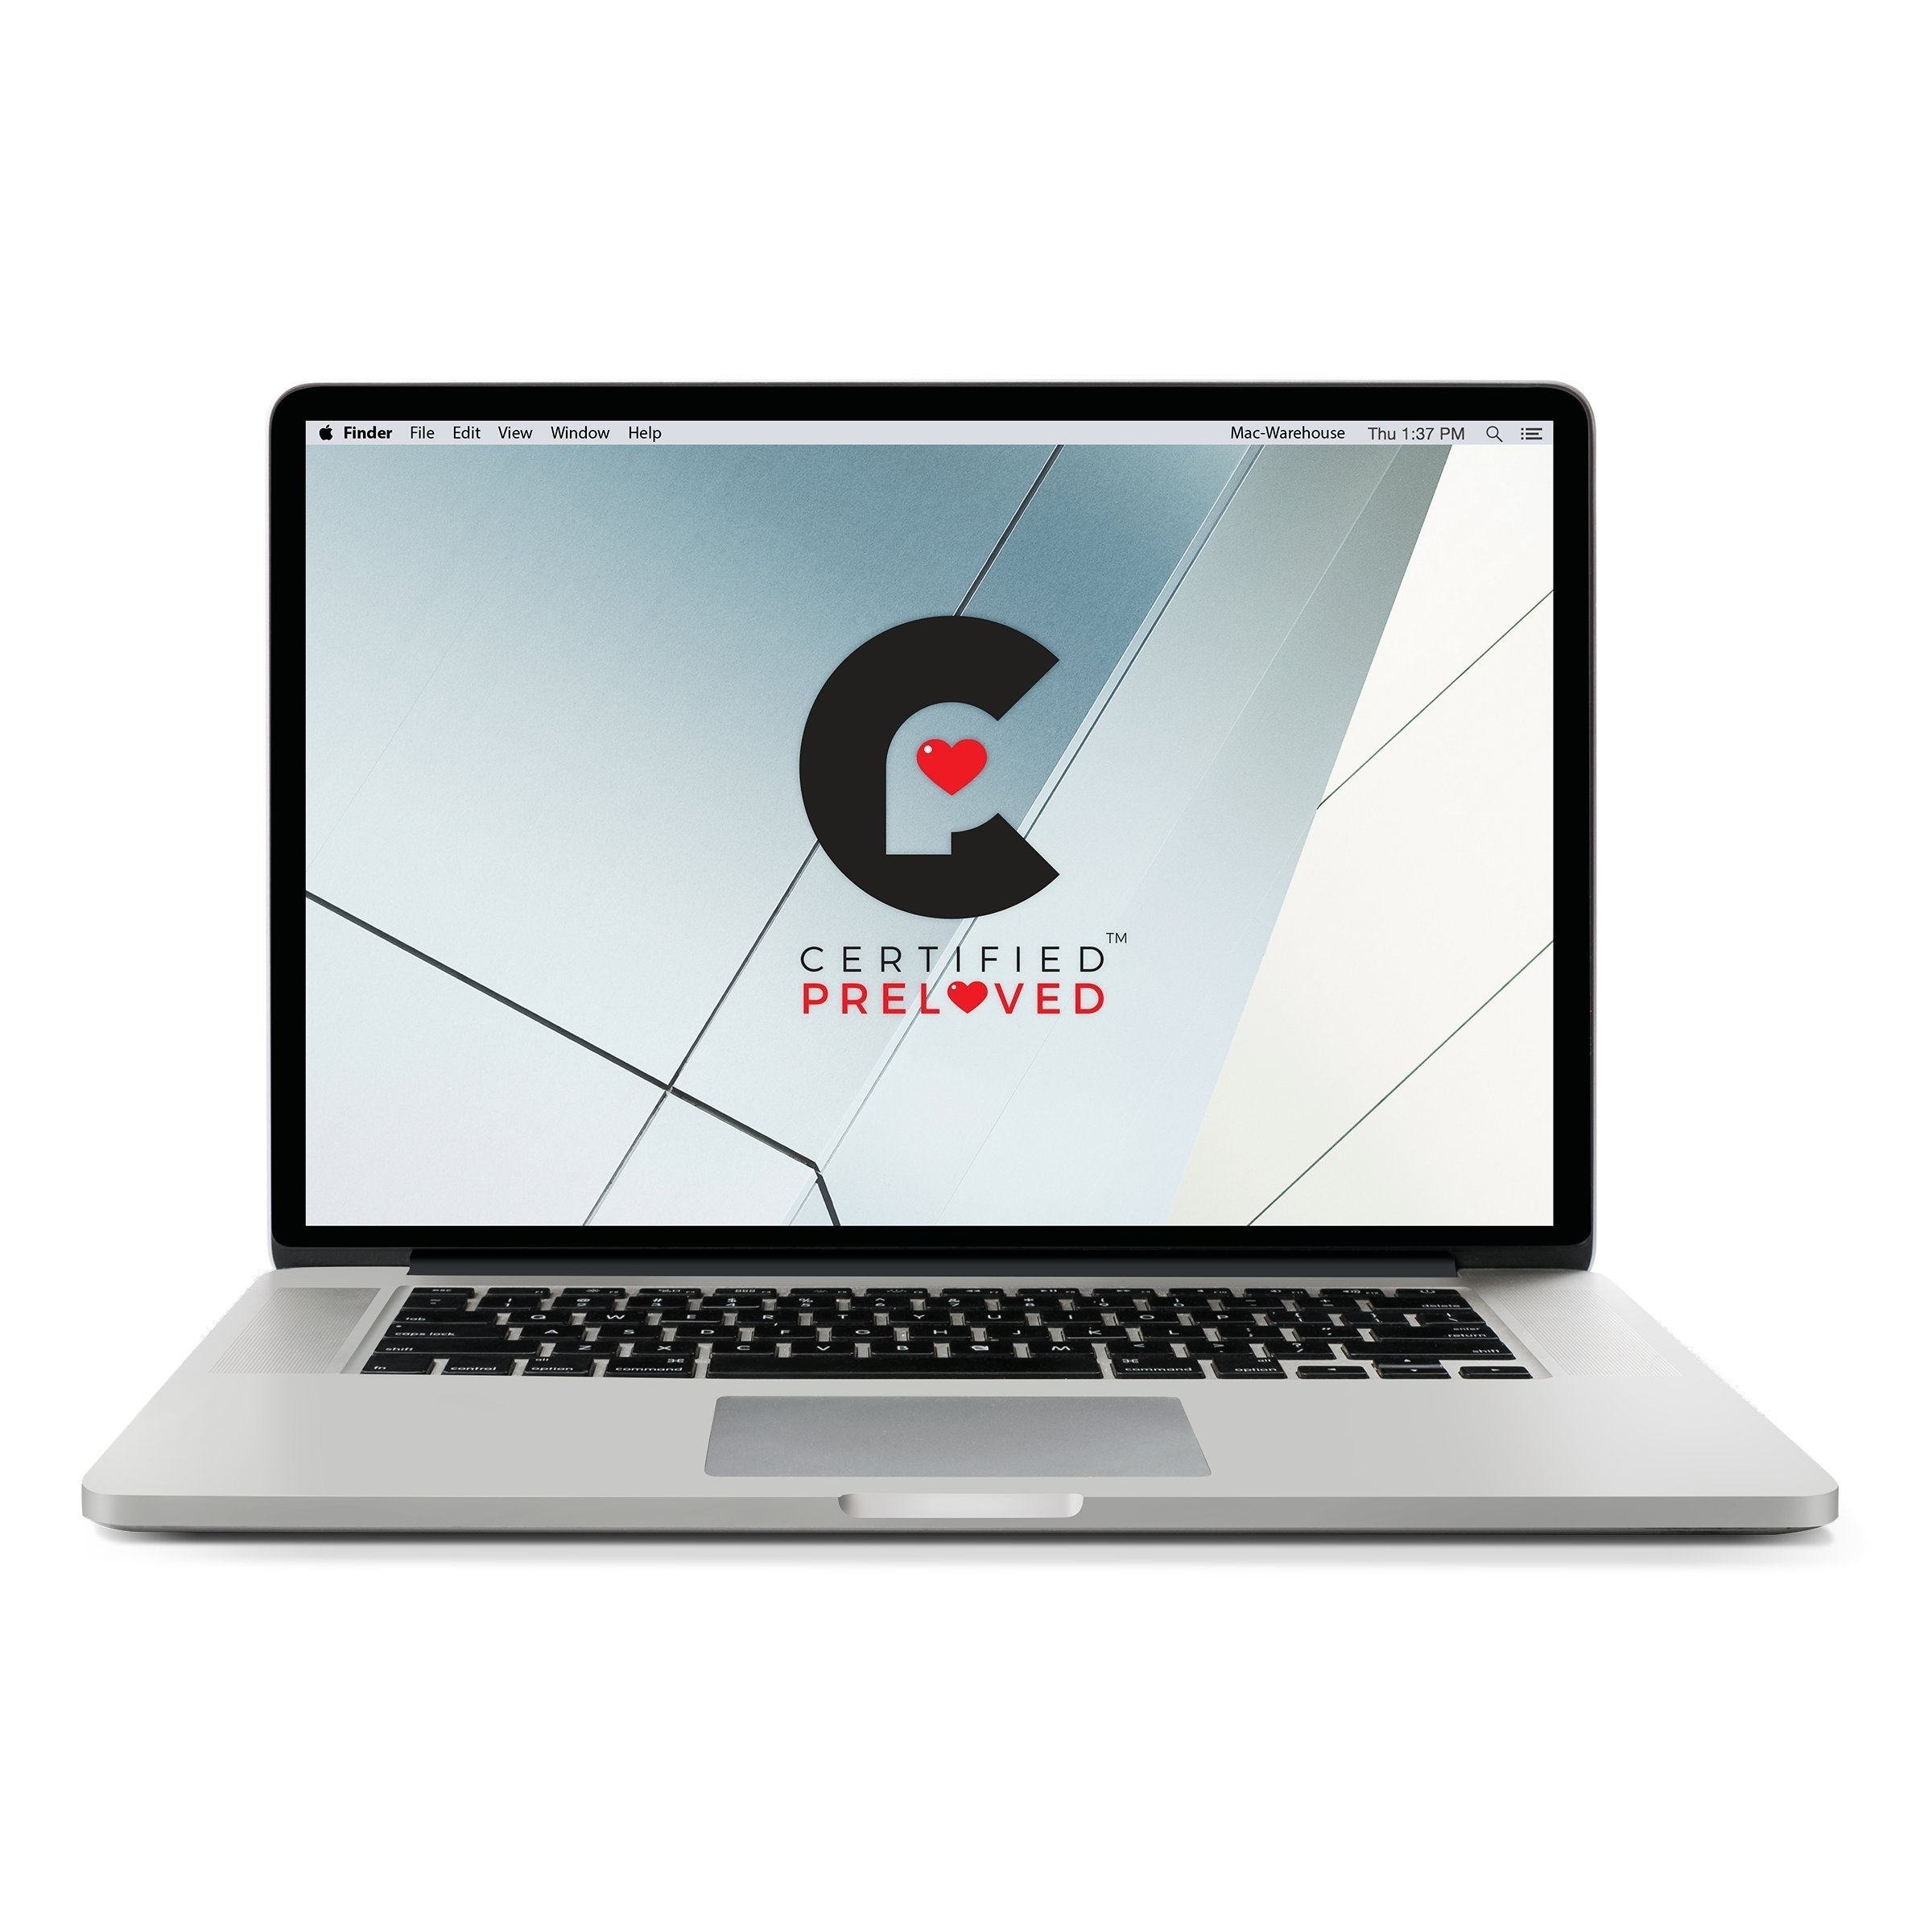 Apple MJLQ2LL/A 15.4 inch Macbook Pro Retina QCi7 2.2 GHz – Certified Preloved